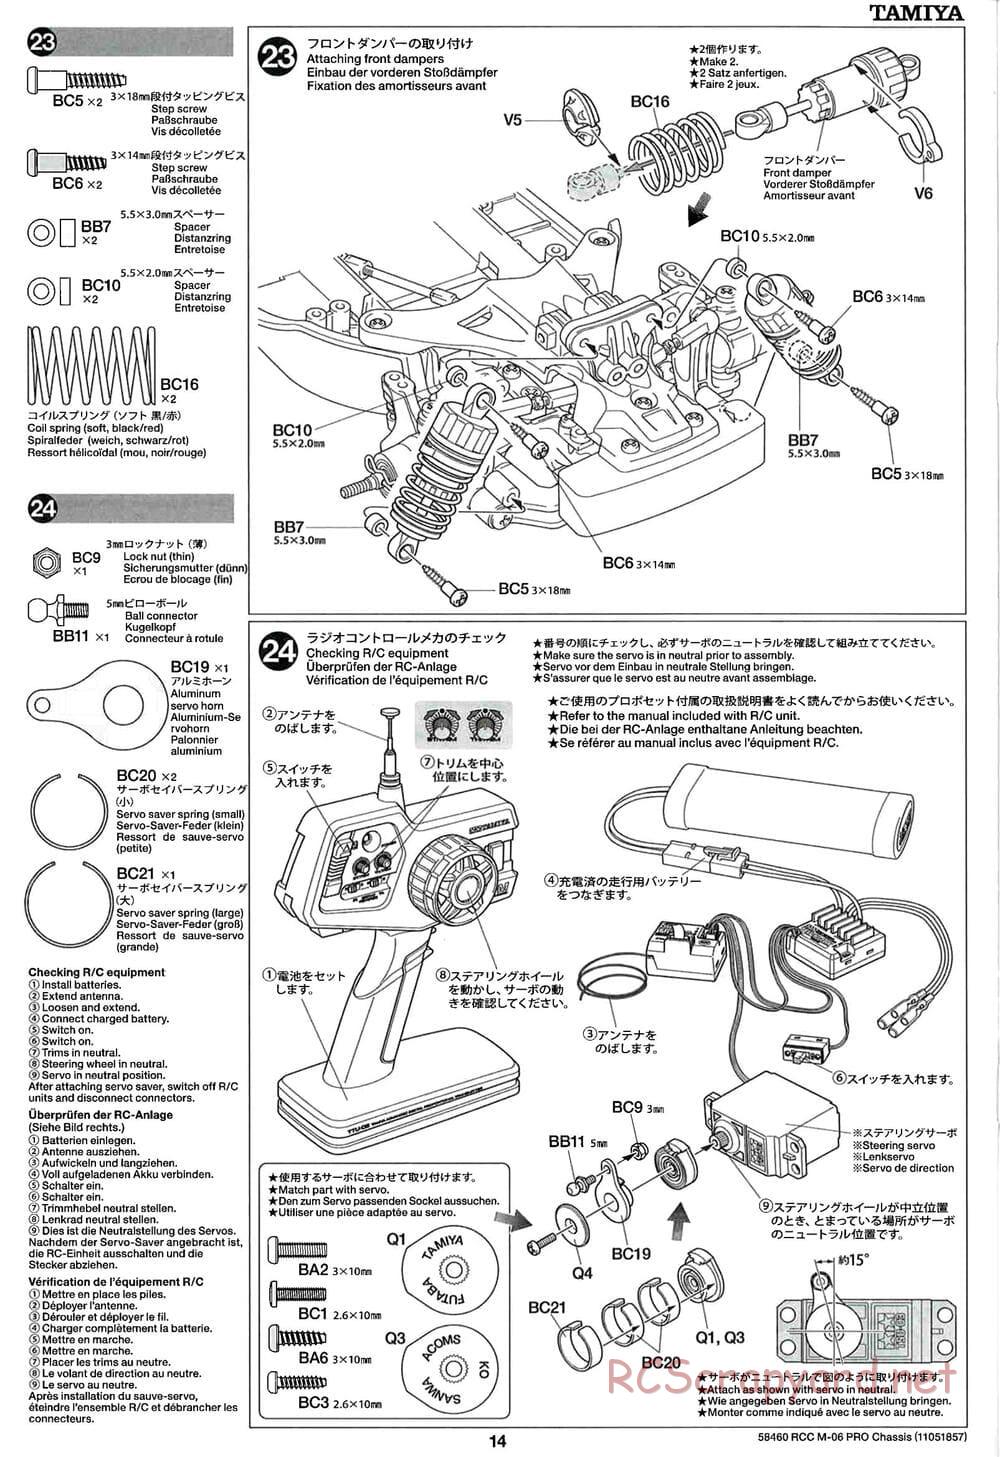 Tamiya - M-06 Pro Chassis - Manual - Page 14